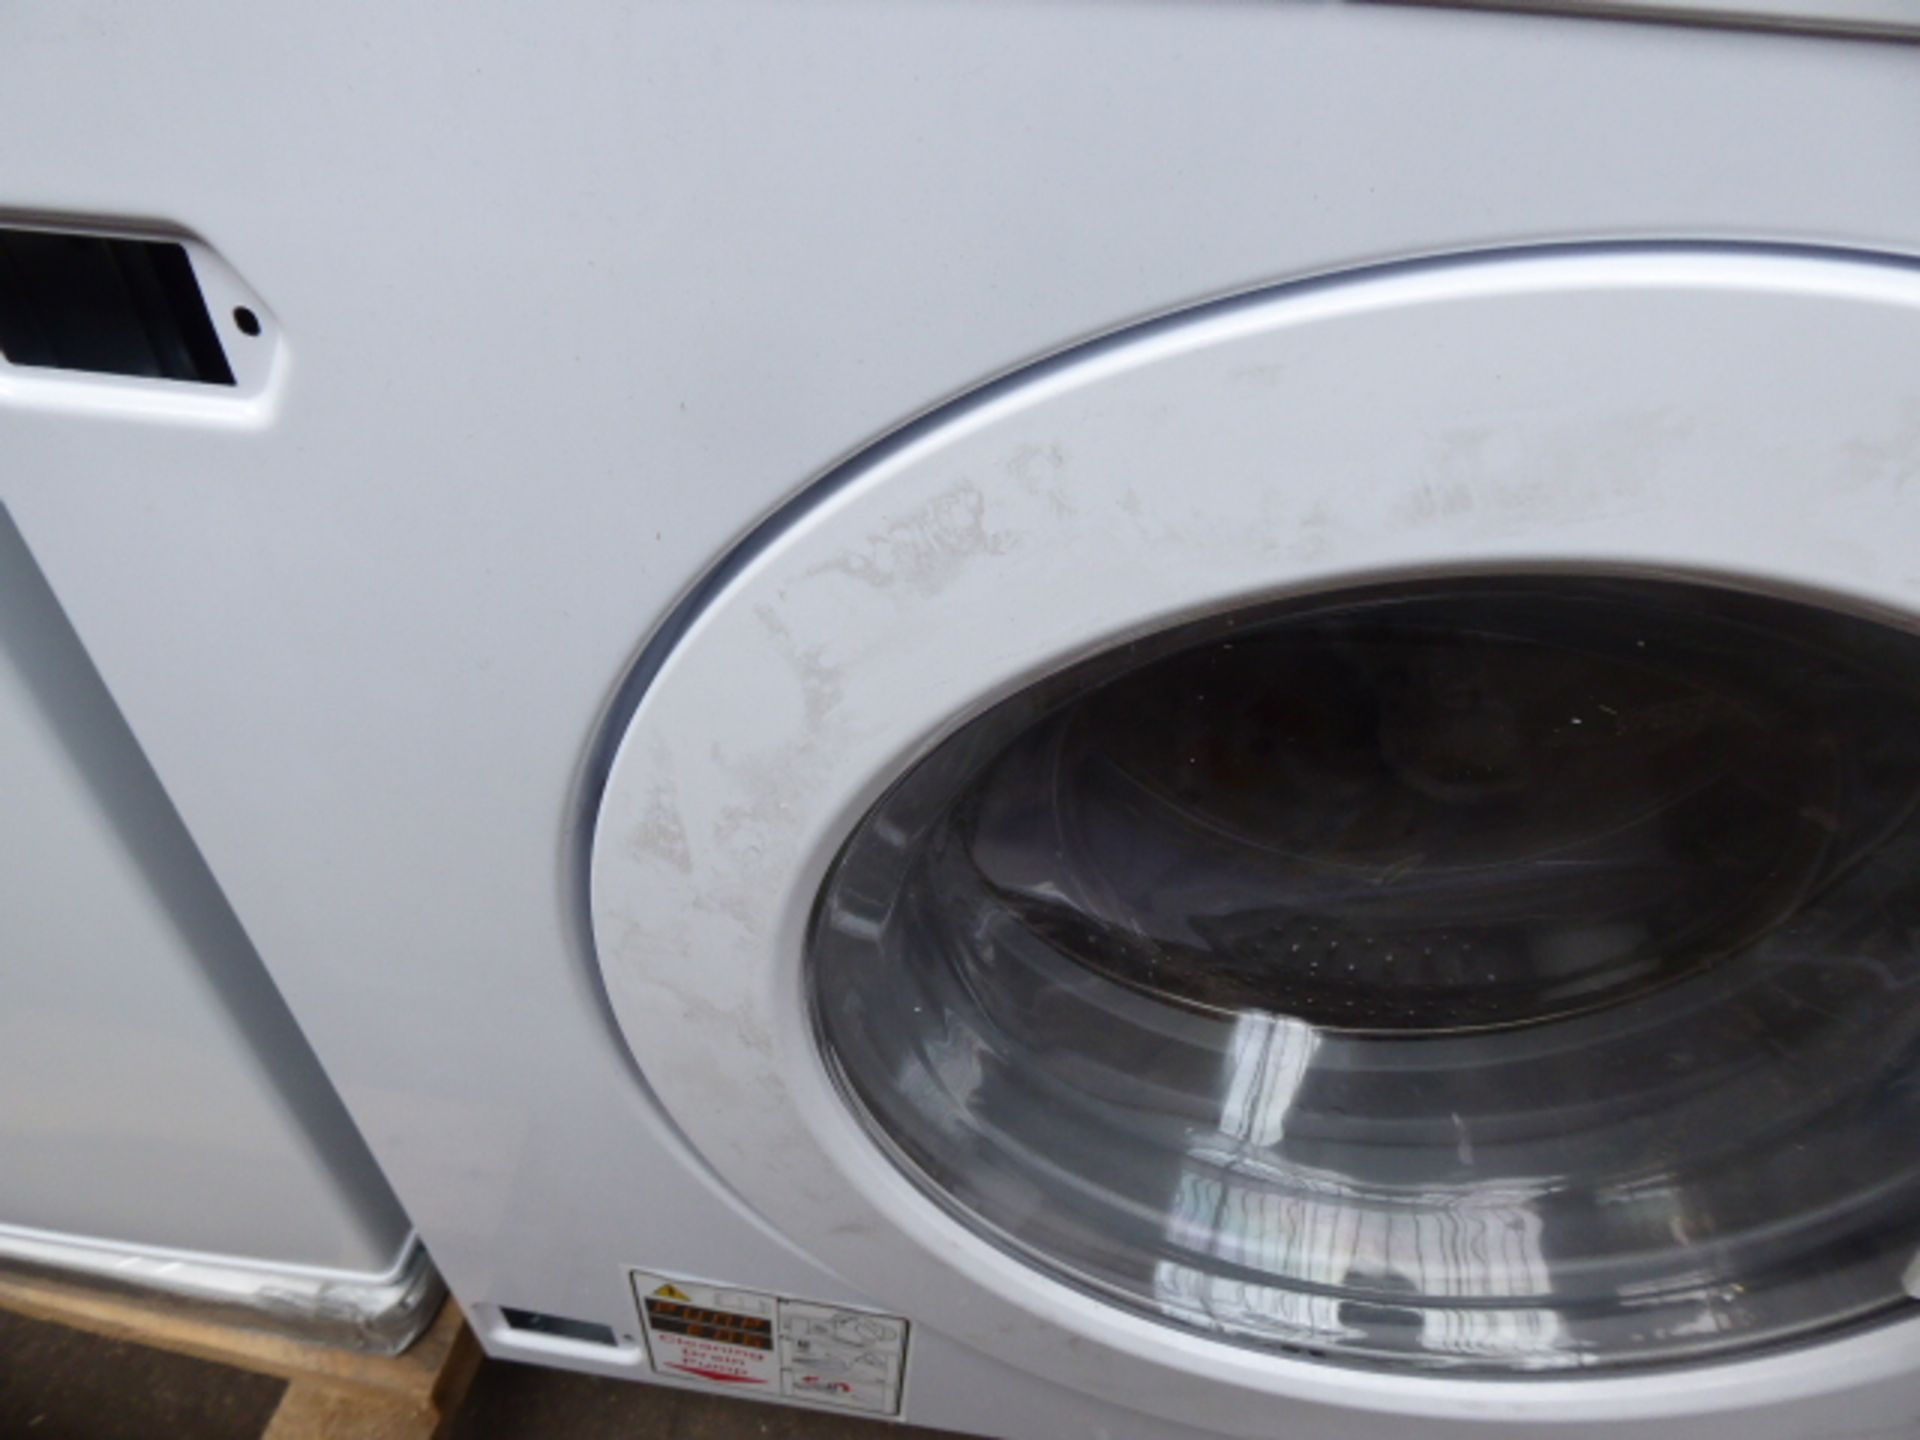 WKD28352GBB Bosch Washer-dryer - Image 2 of 3